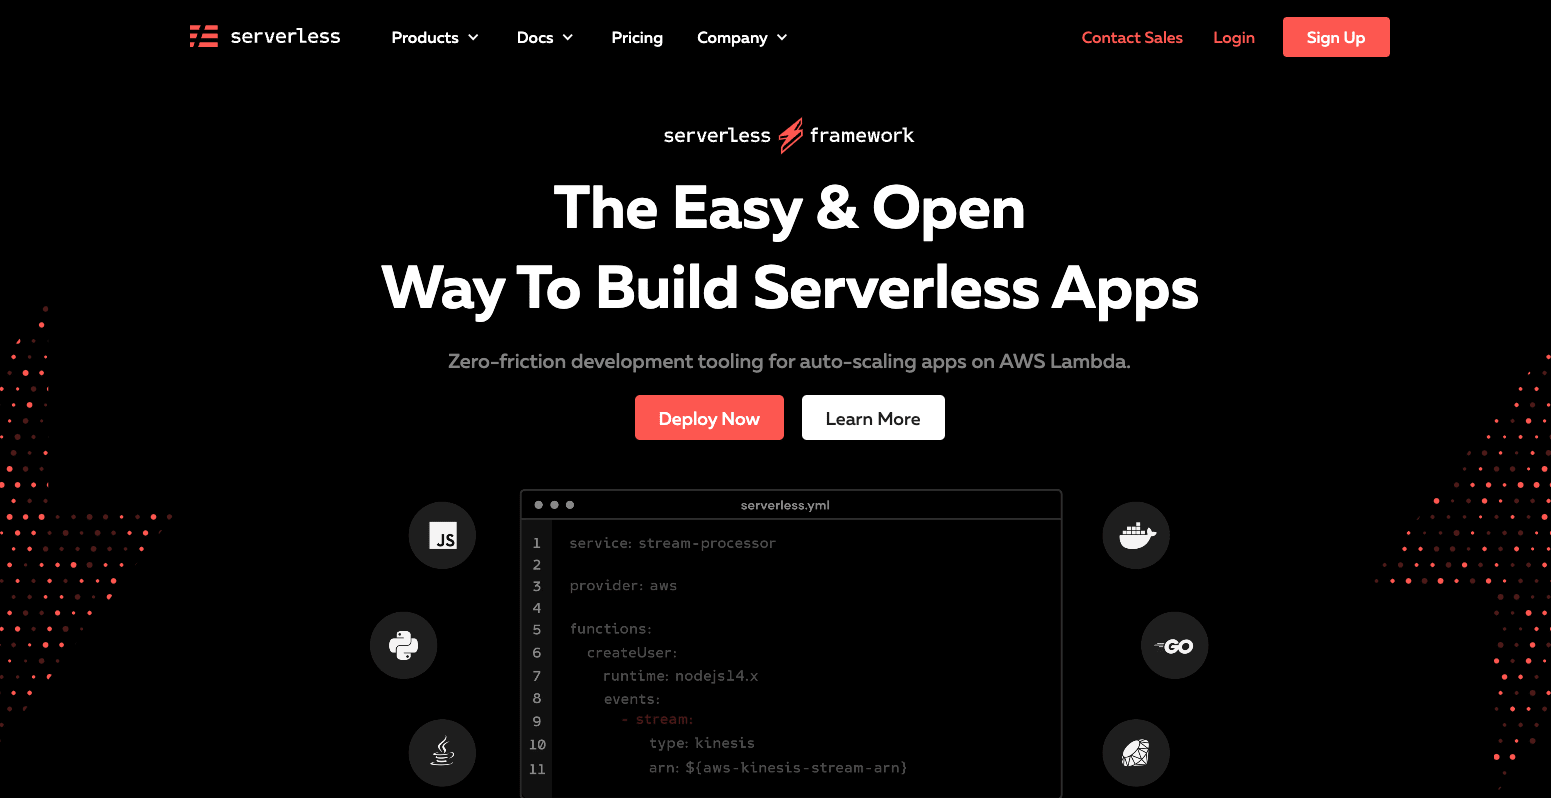 the homepage of serverless.com